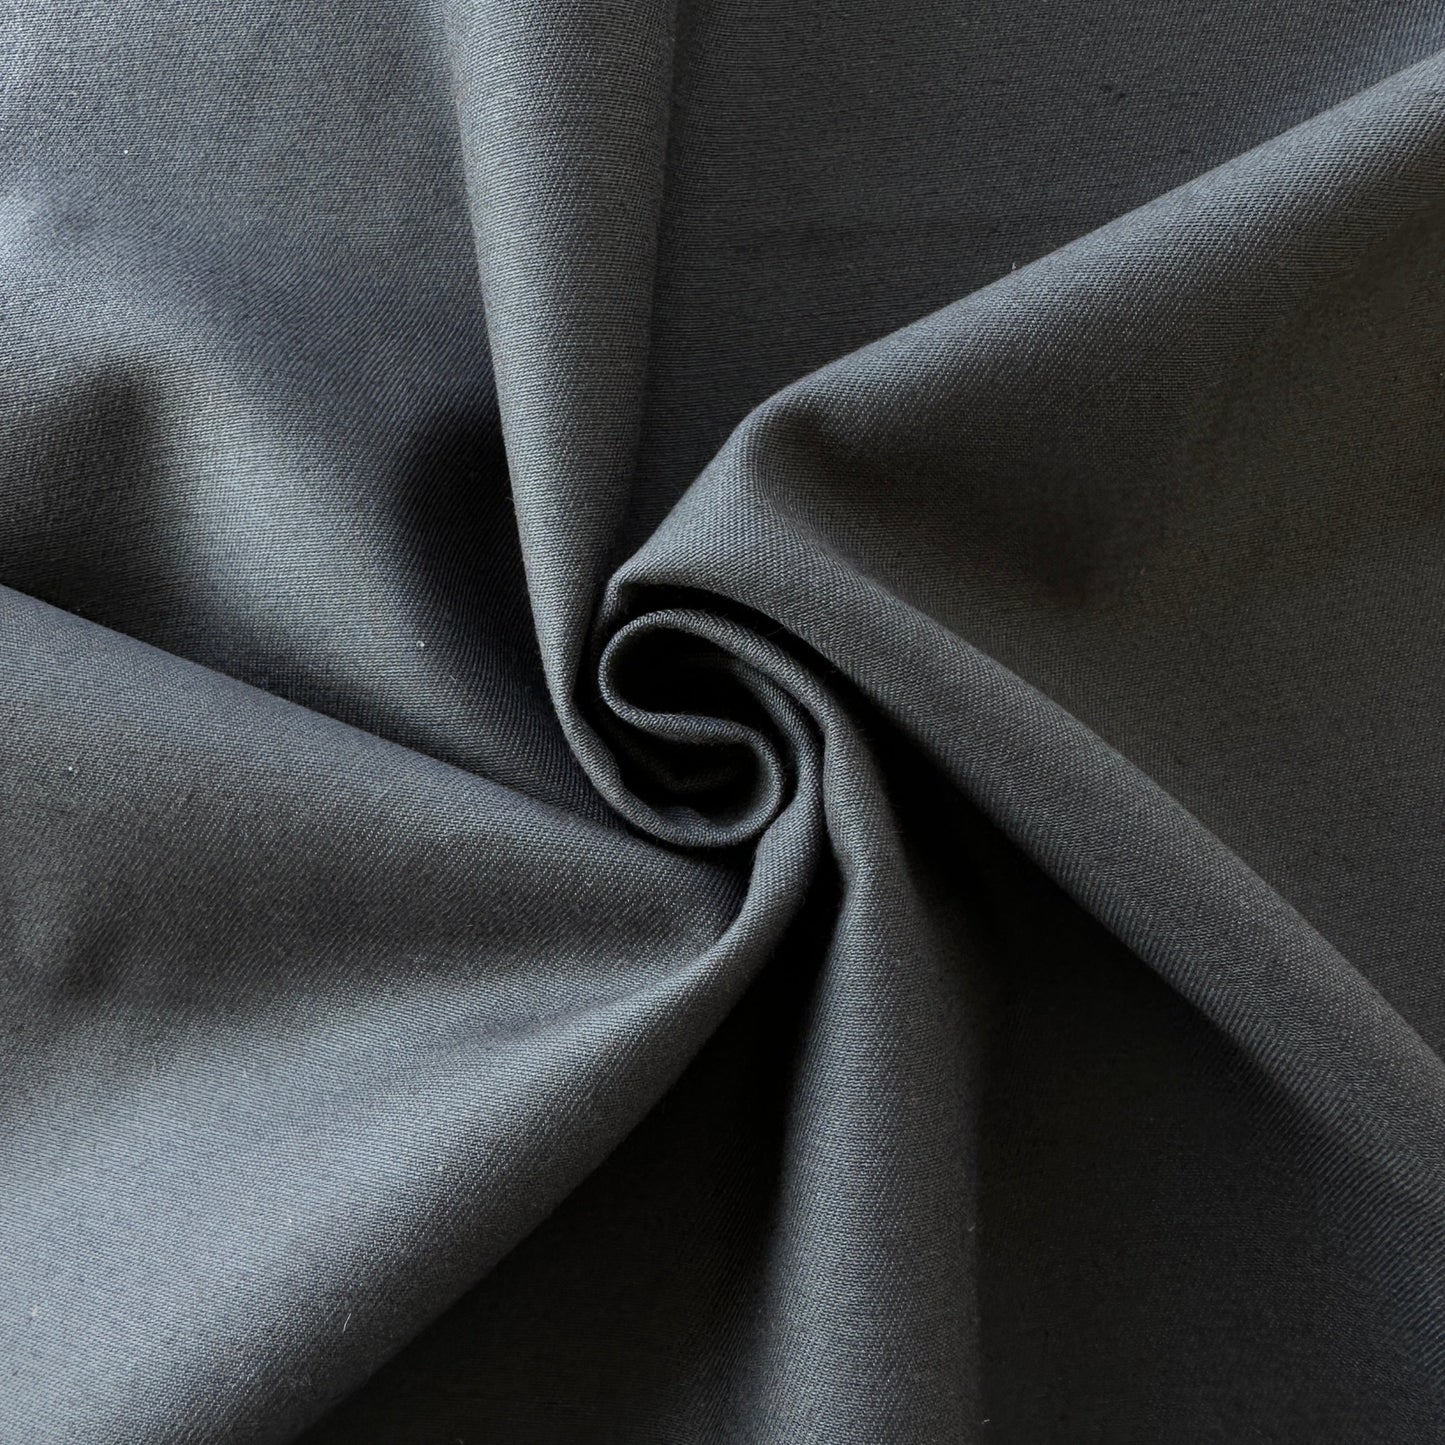 Cotton Twill Fabric in Dark Grey